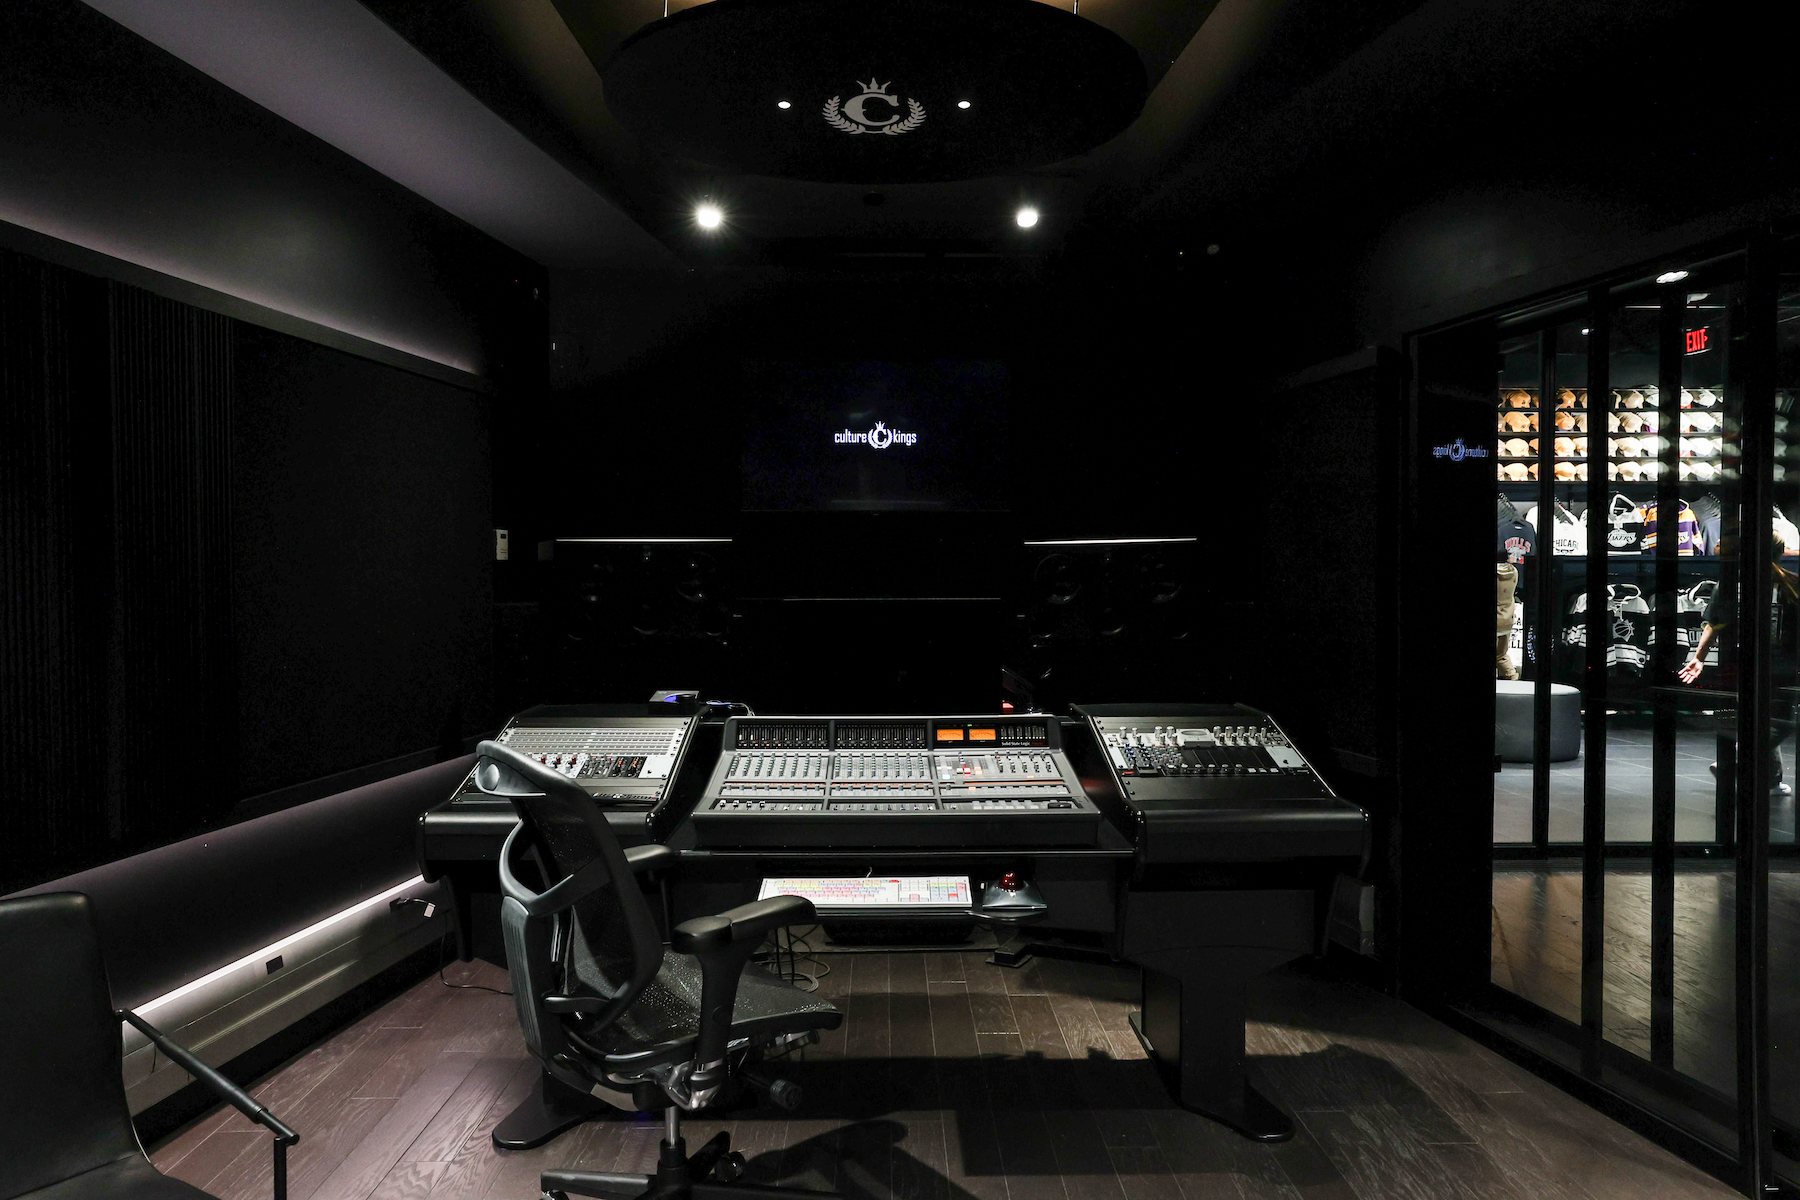 A recording studio inside the store